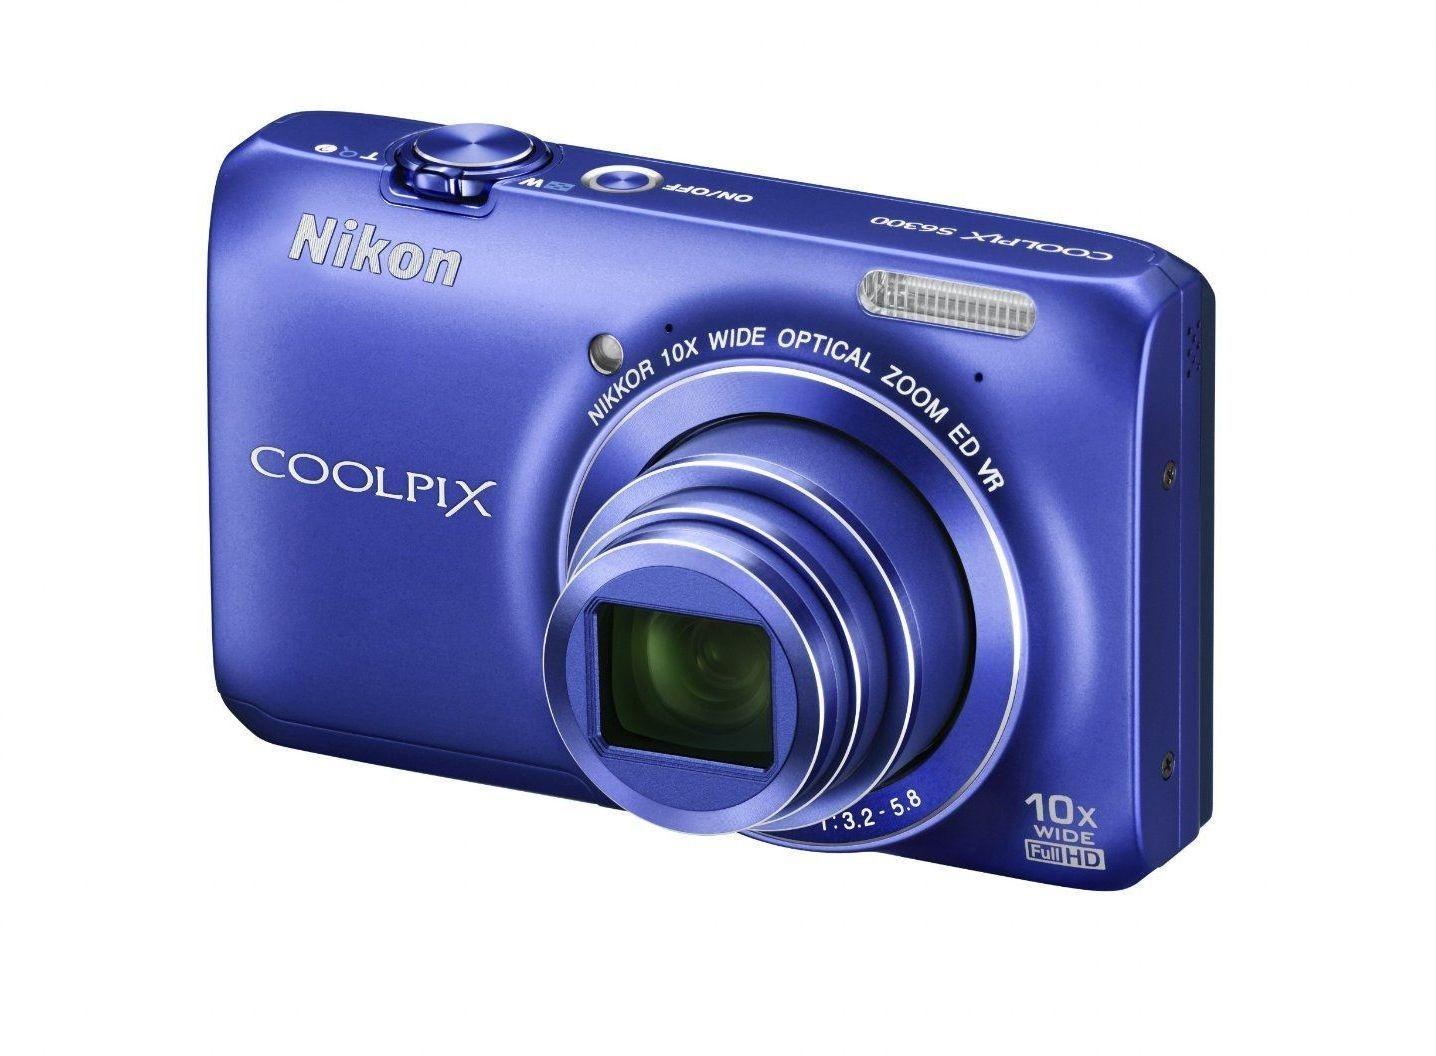 http://ii.alatest.com/product/full/a/9/Nikon-Coolpix-S6300-1.jpg